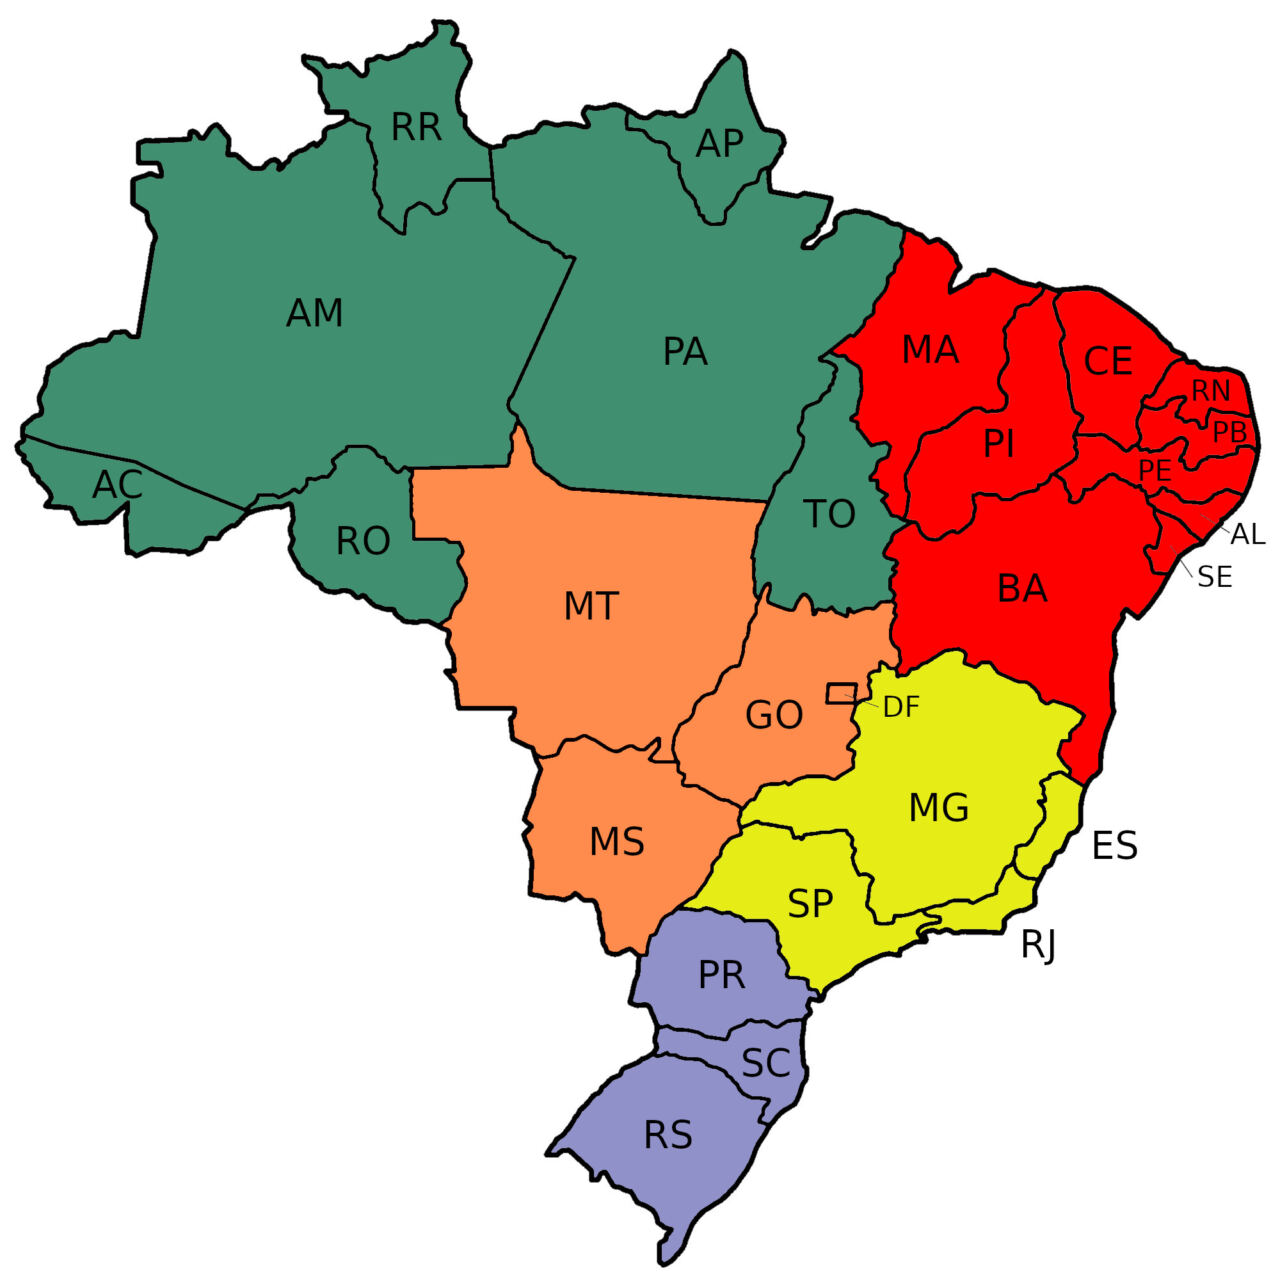 mapa-do-brasil-legendado-pintado-regioes-1280x1280.jpg